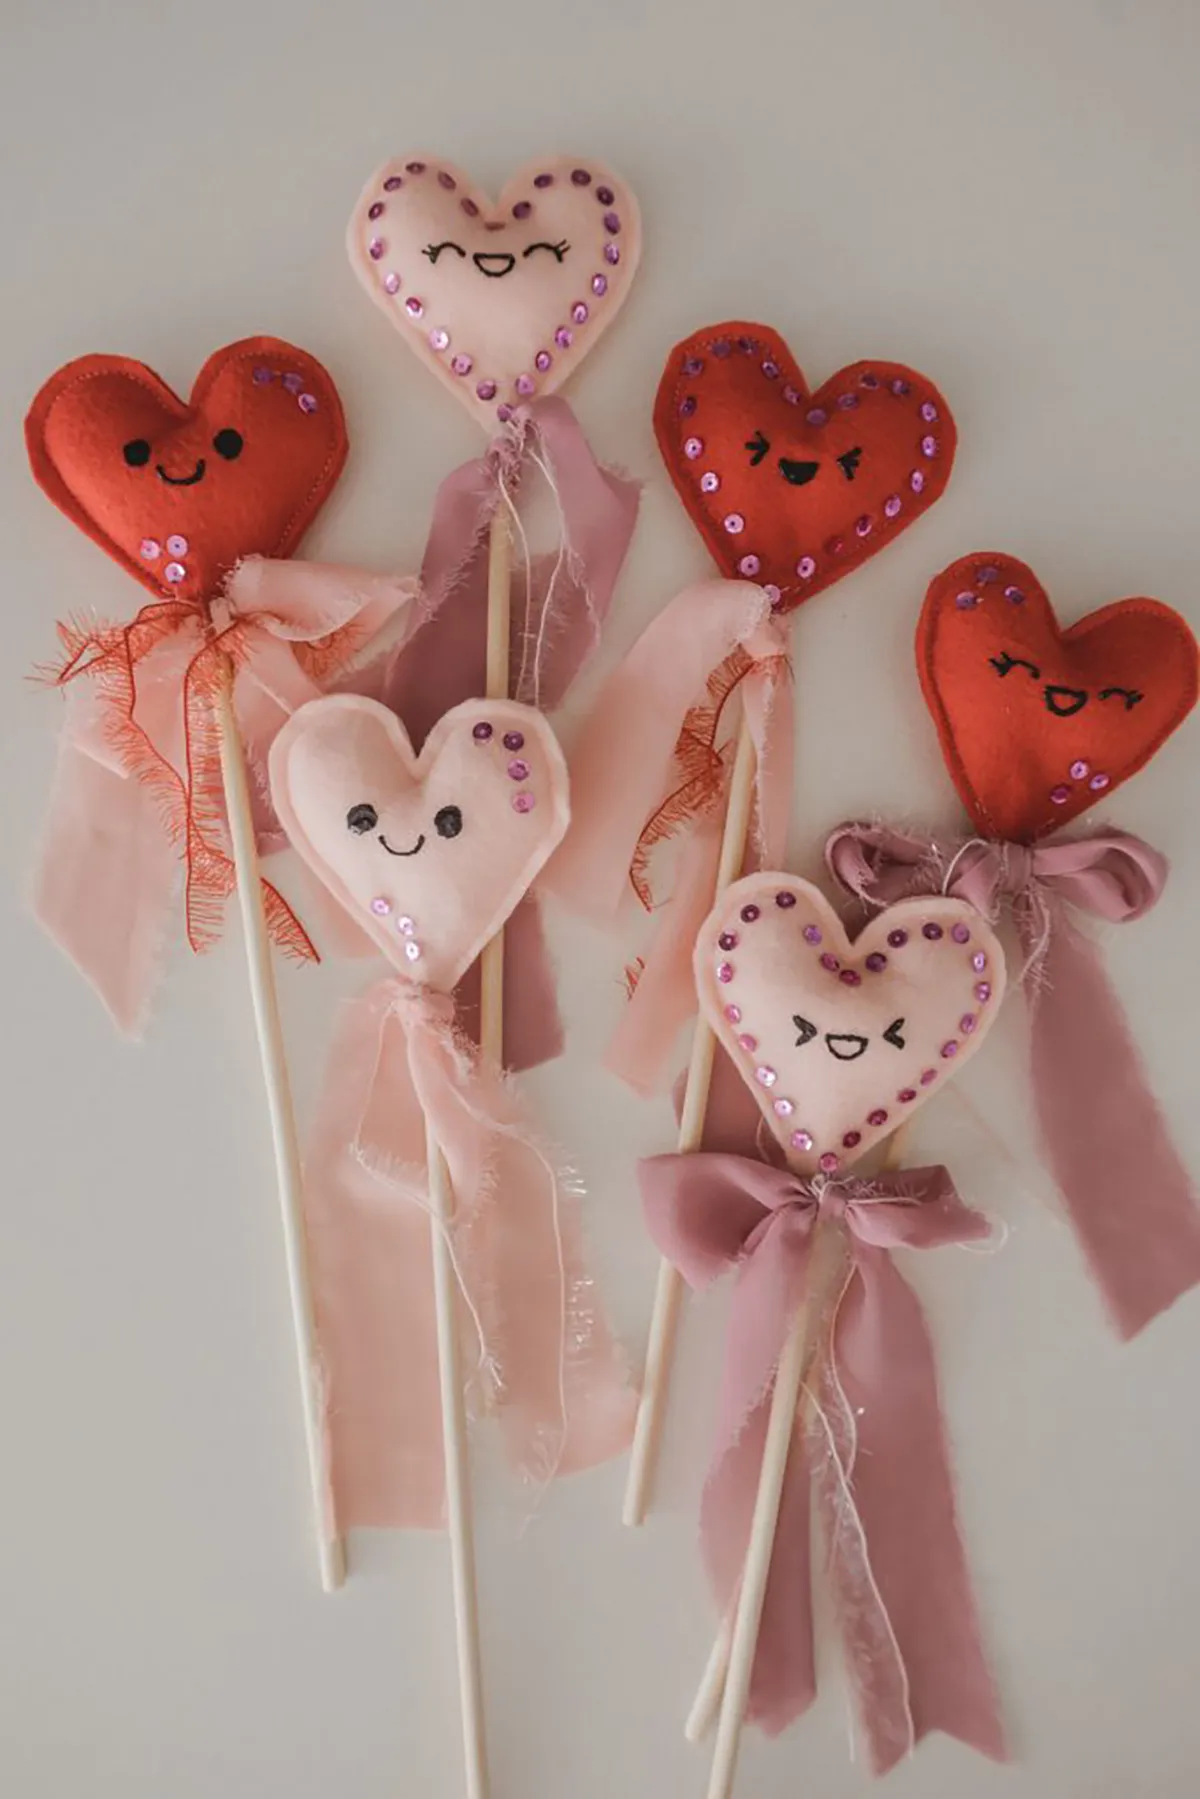 A bunch of heart-shaped wands